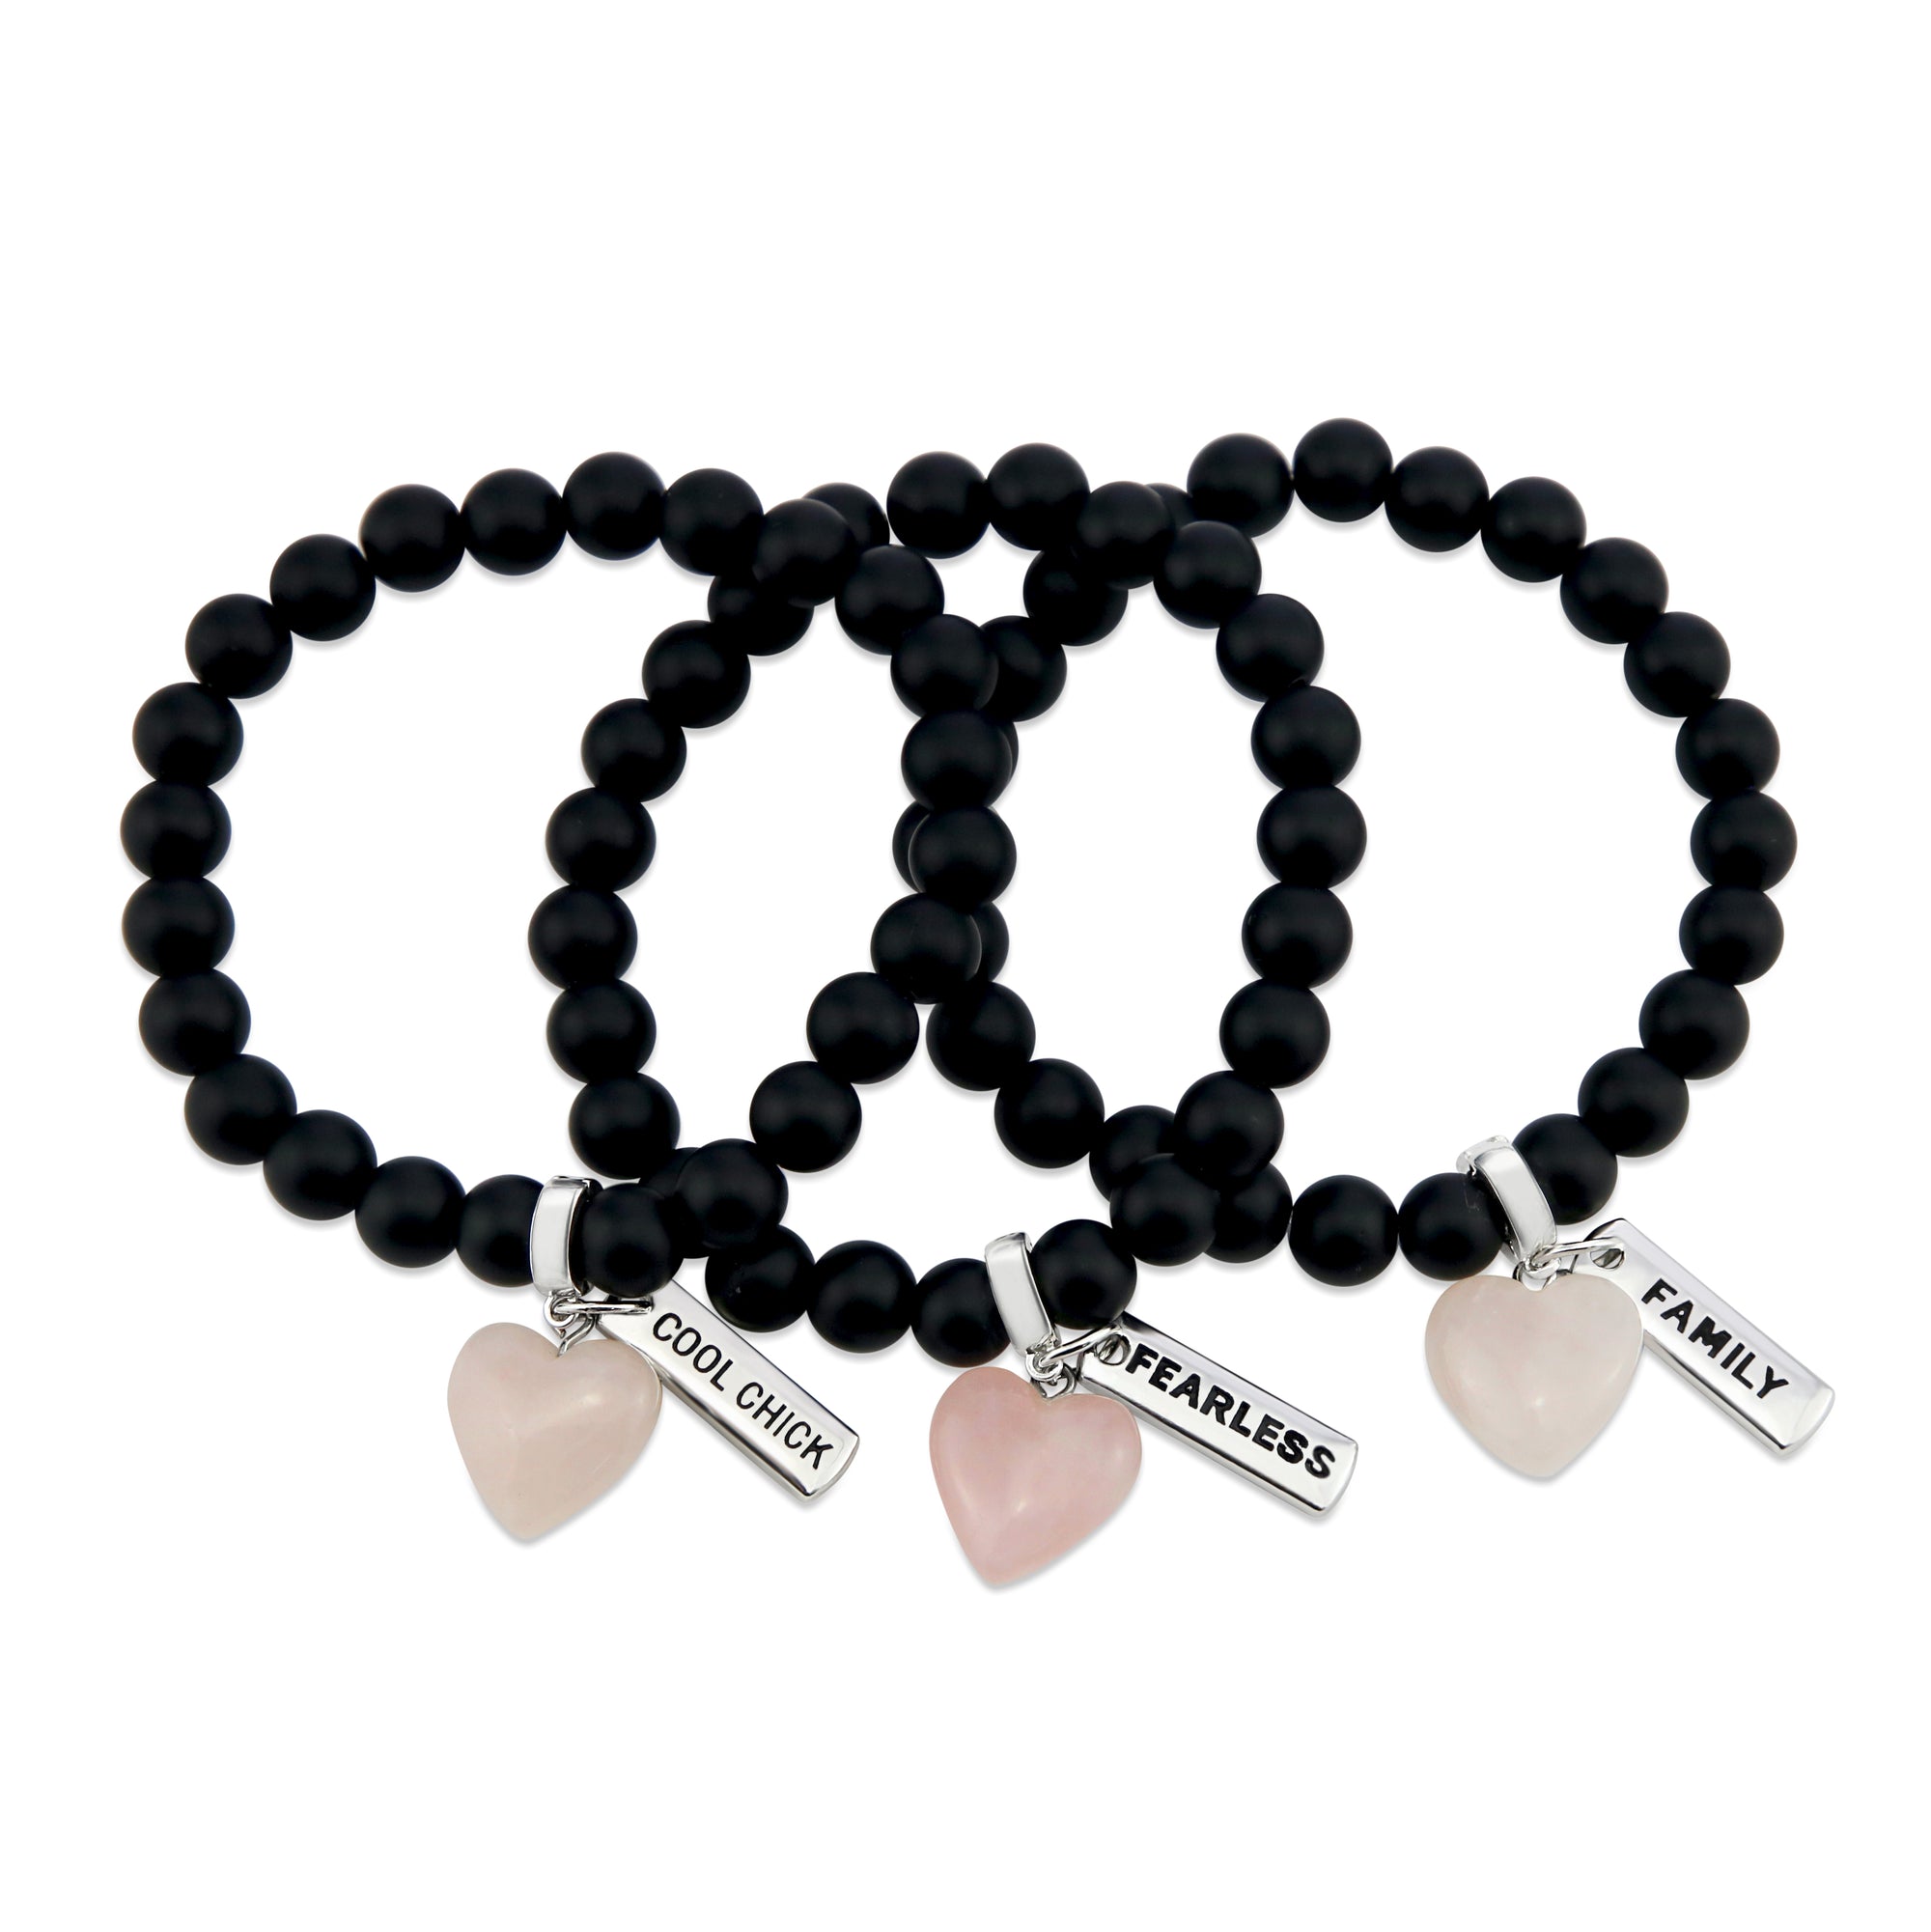 SWEETHEART Bracelet - 8mm MATT BLACK ONYX stone beads with Small ROSE QUARTZ Heart & Word Charm